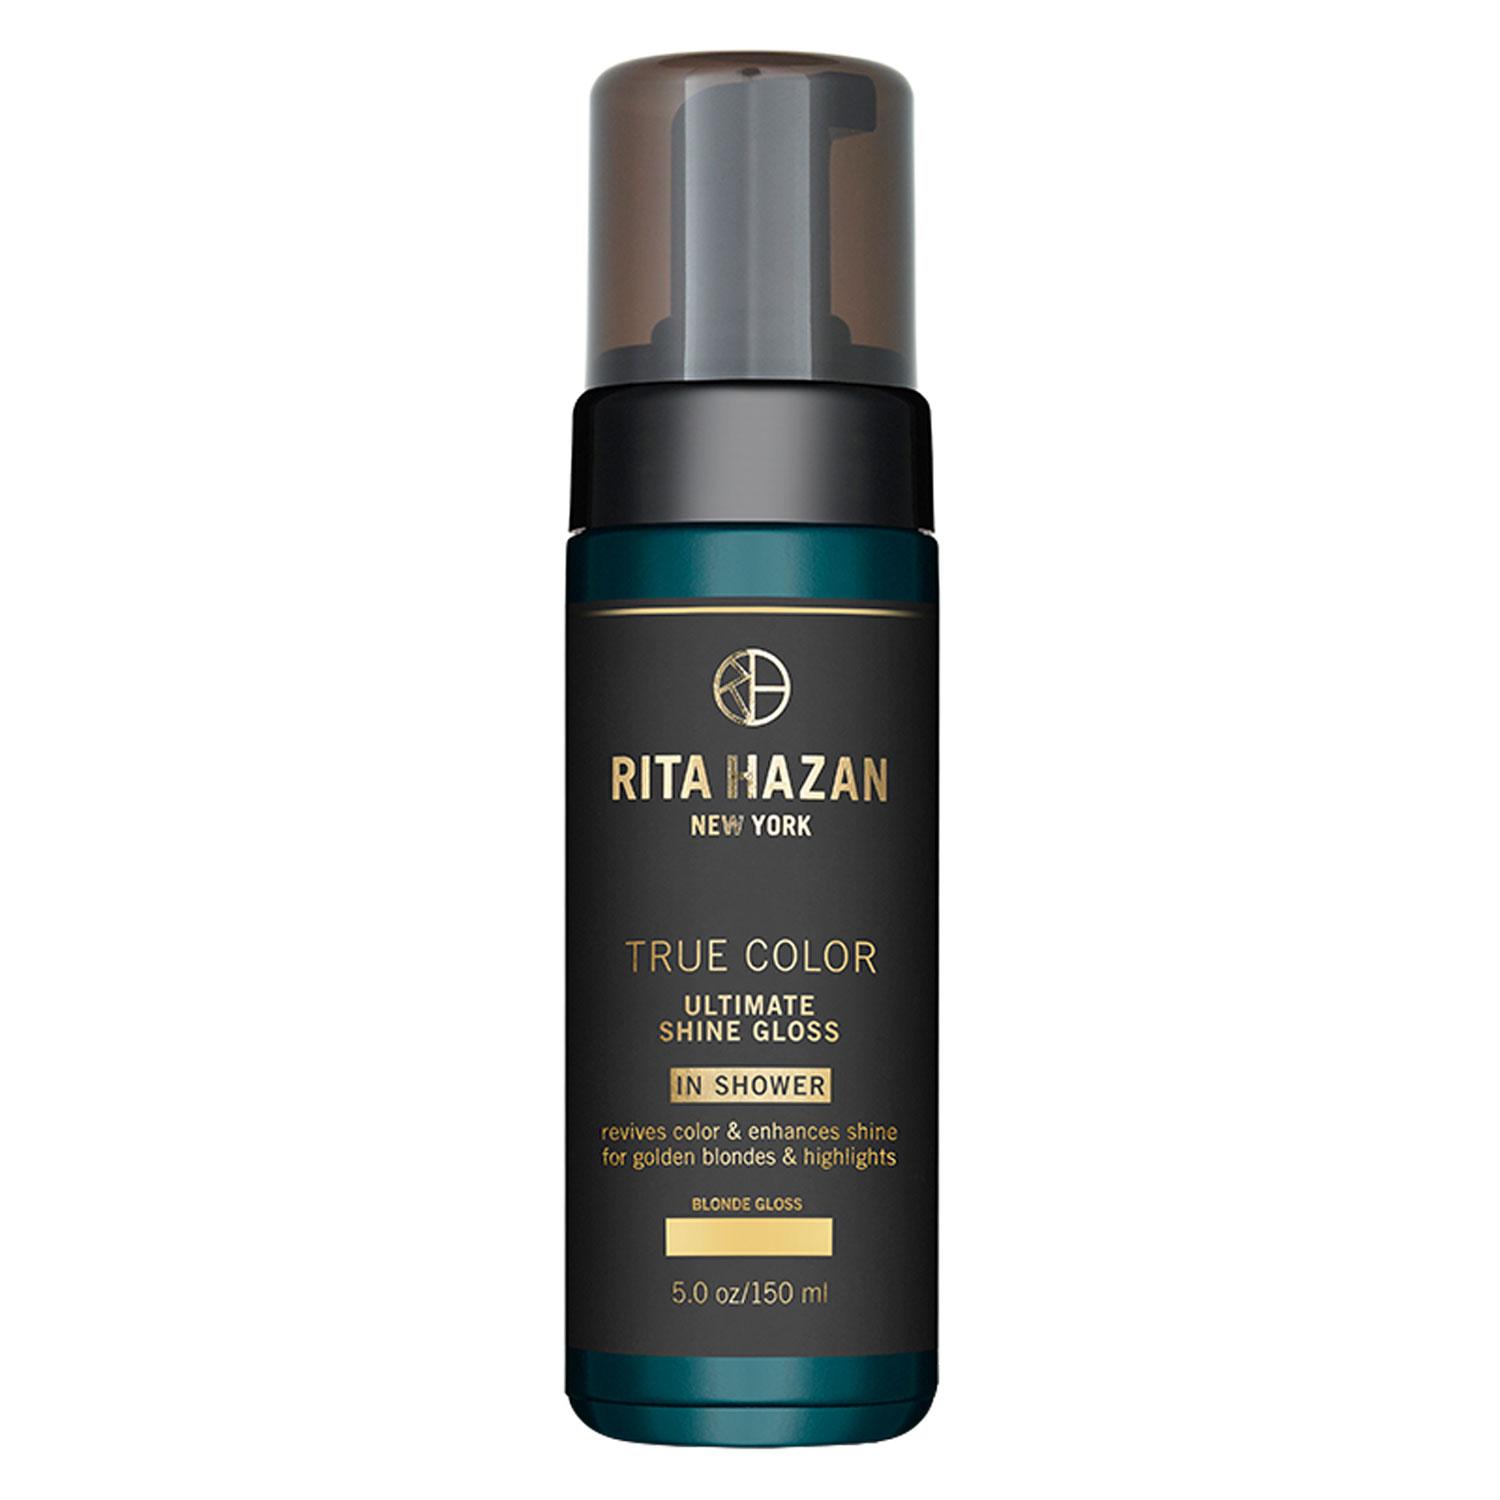 Rita Hazan New York - True Color Ultimate Shine Gloss Blonde